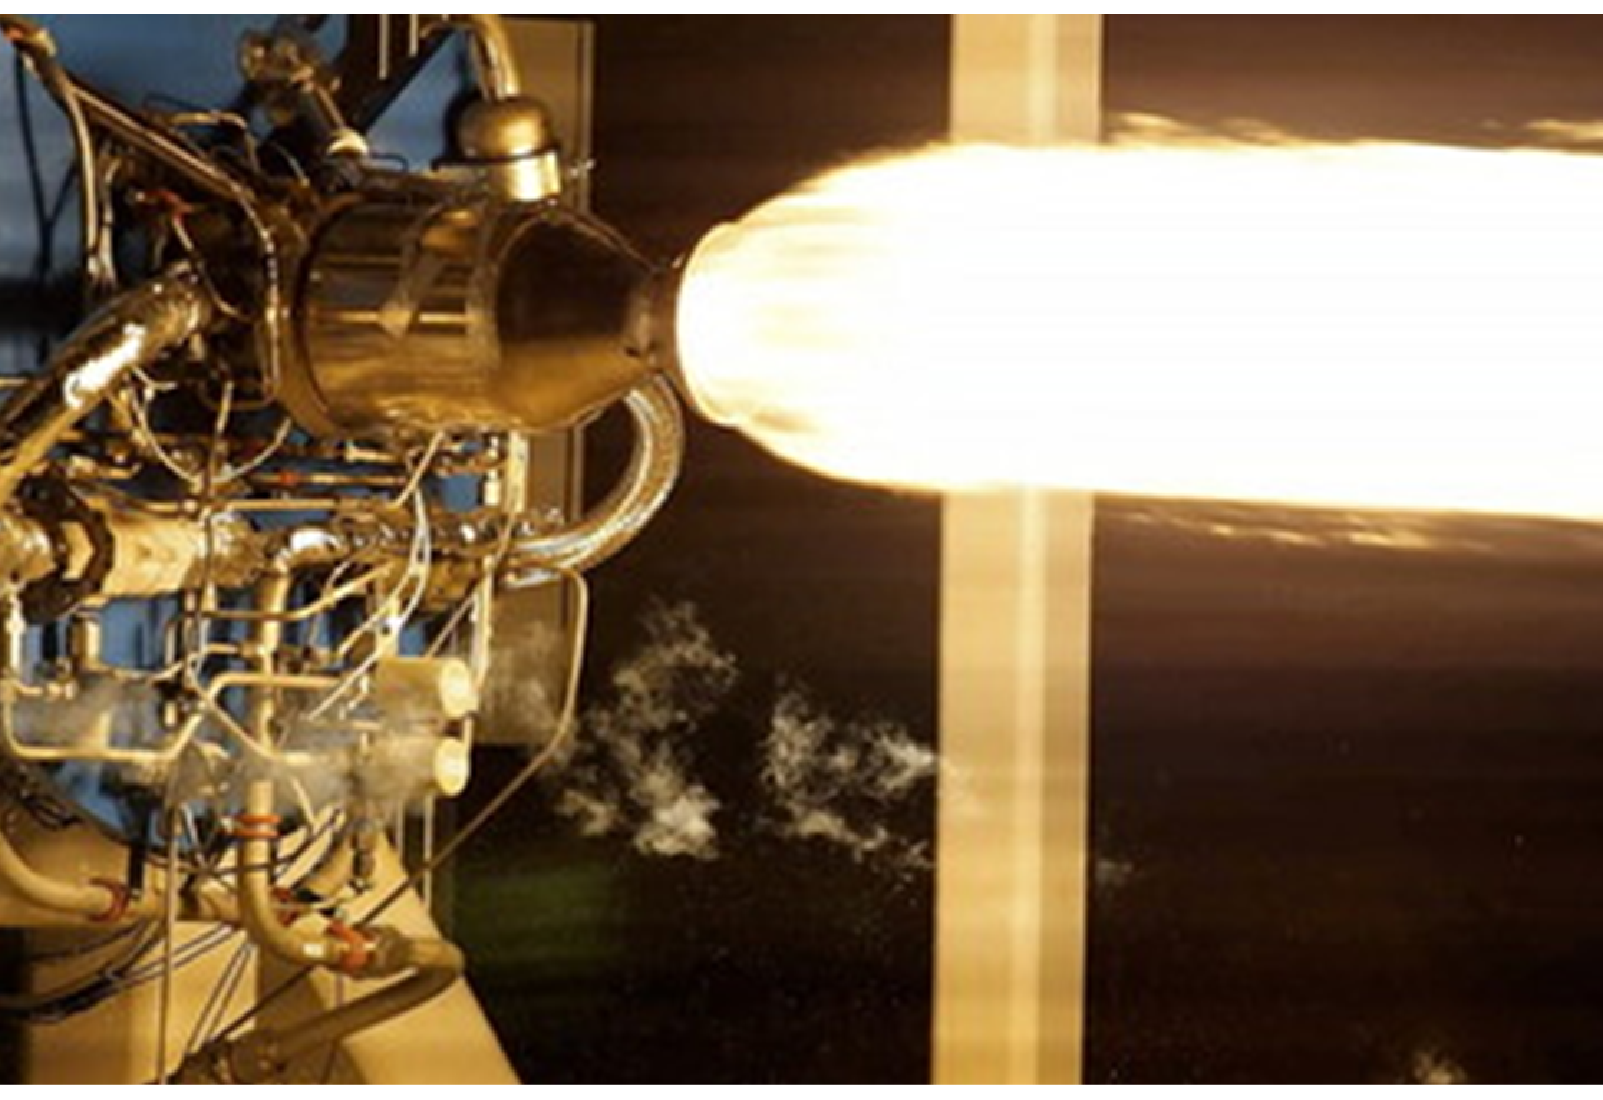 Rocket motor firing using LOX and RP1 Fuiel Mixture